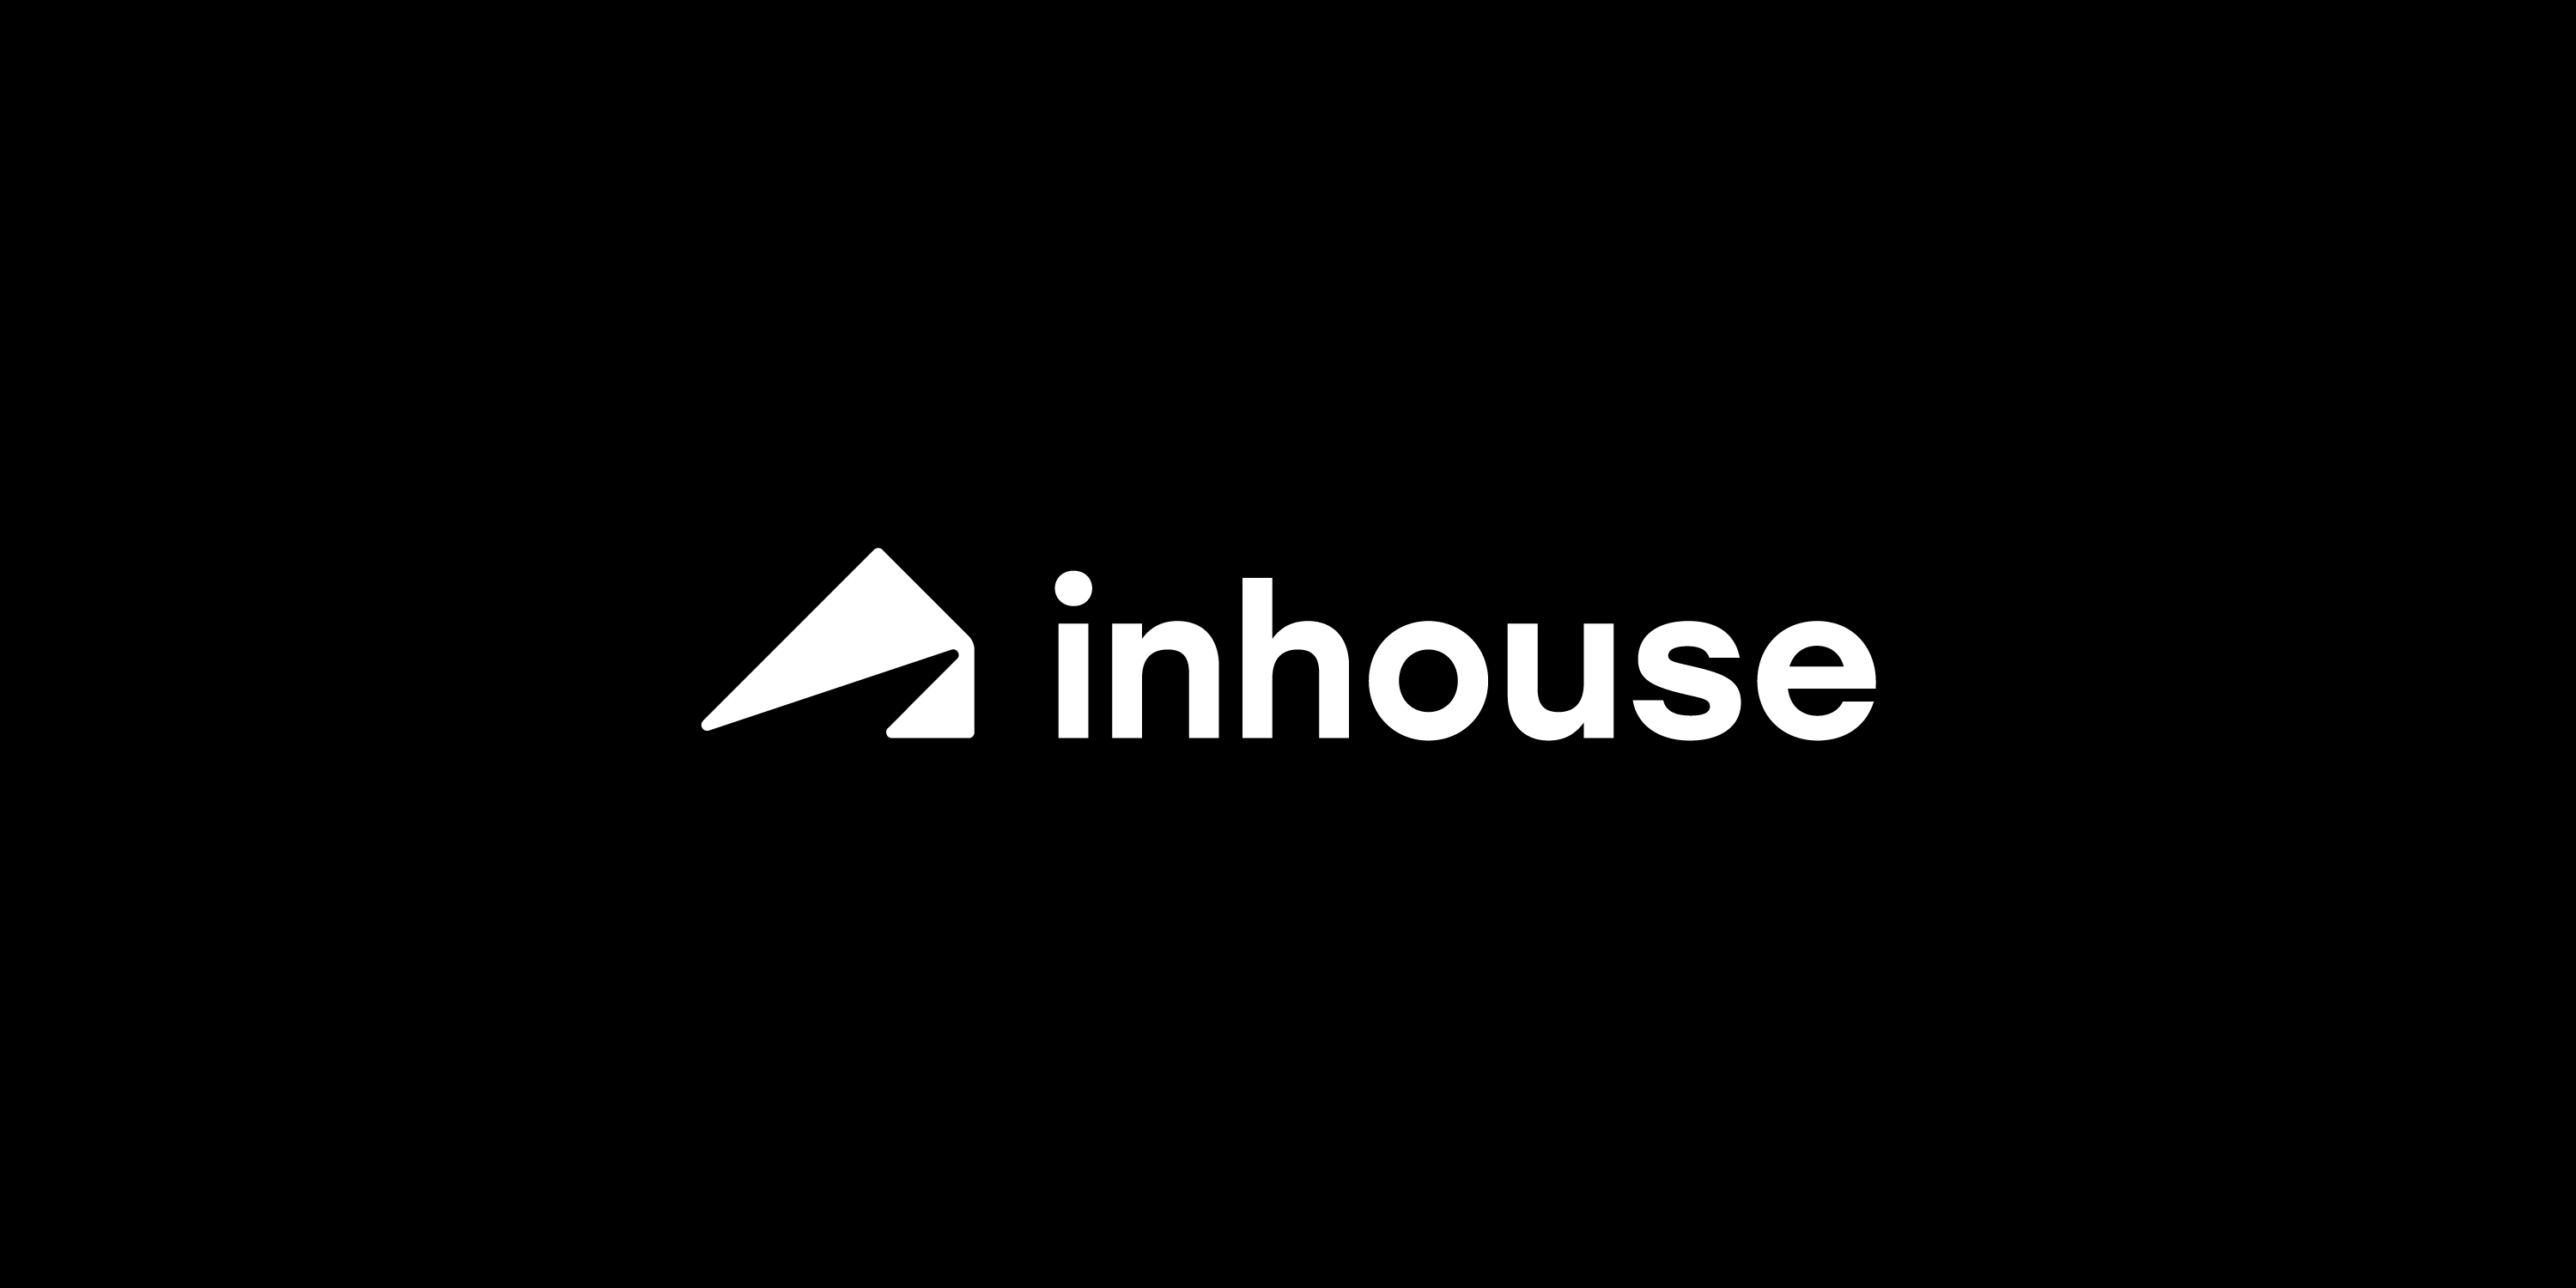 Dynamic-House-logo-Inhouse-text